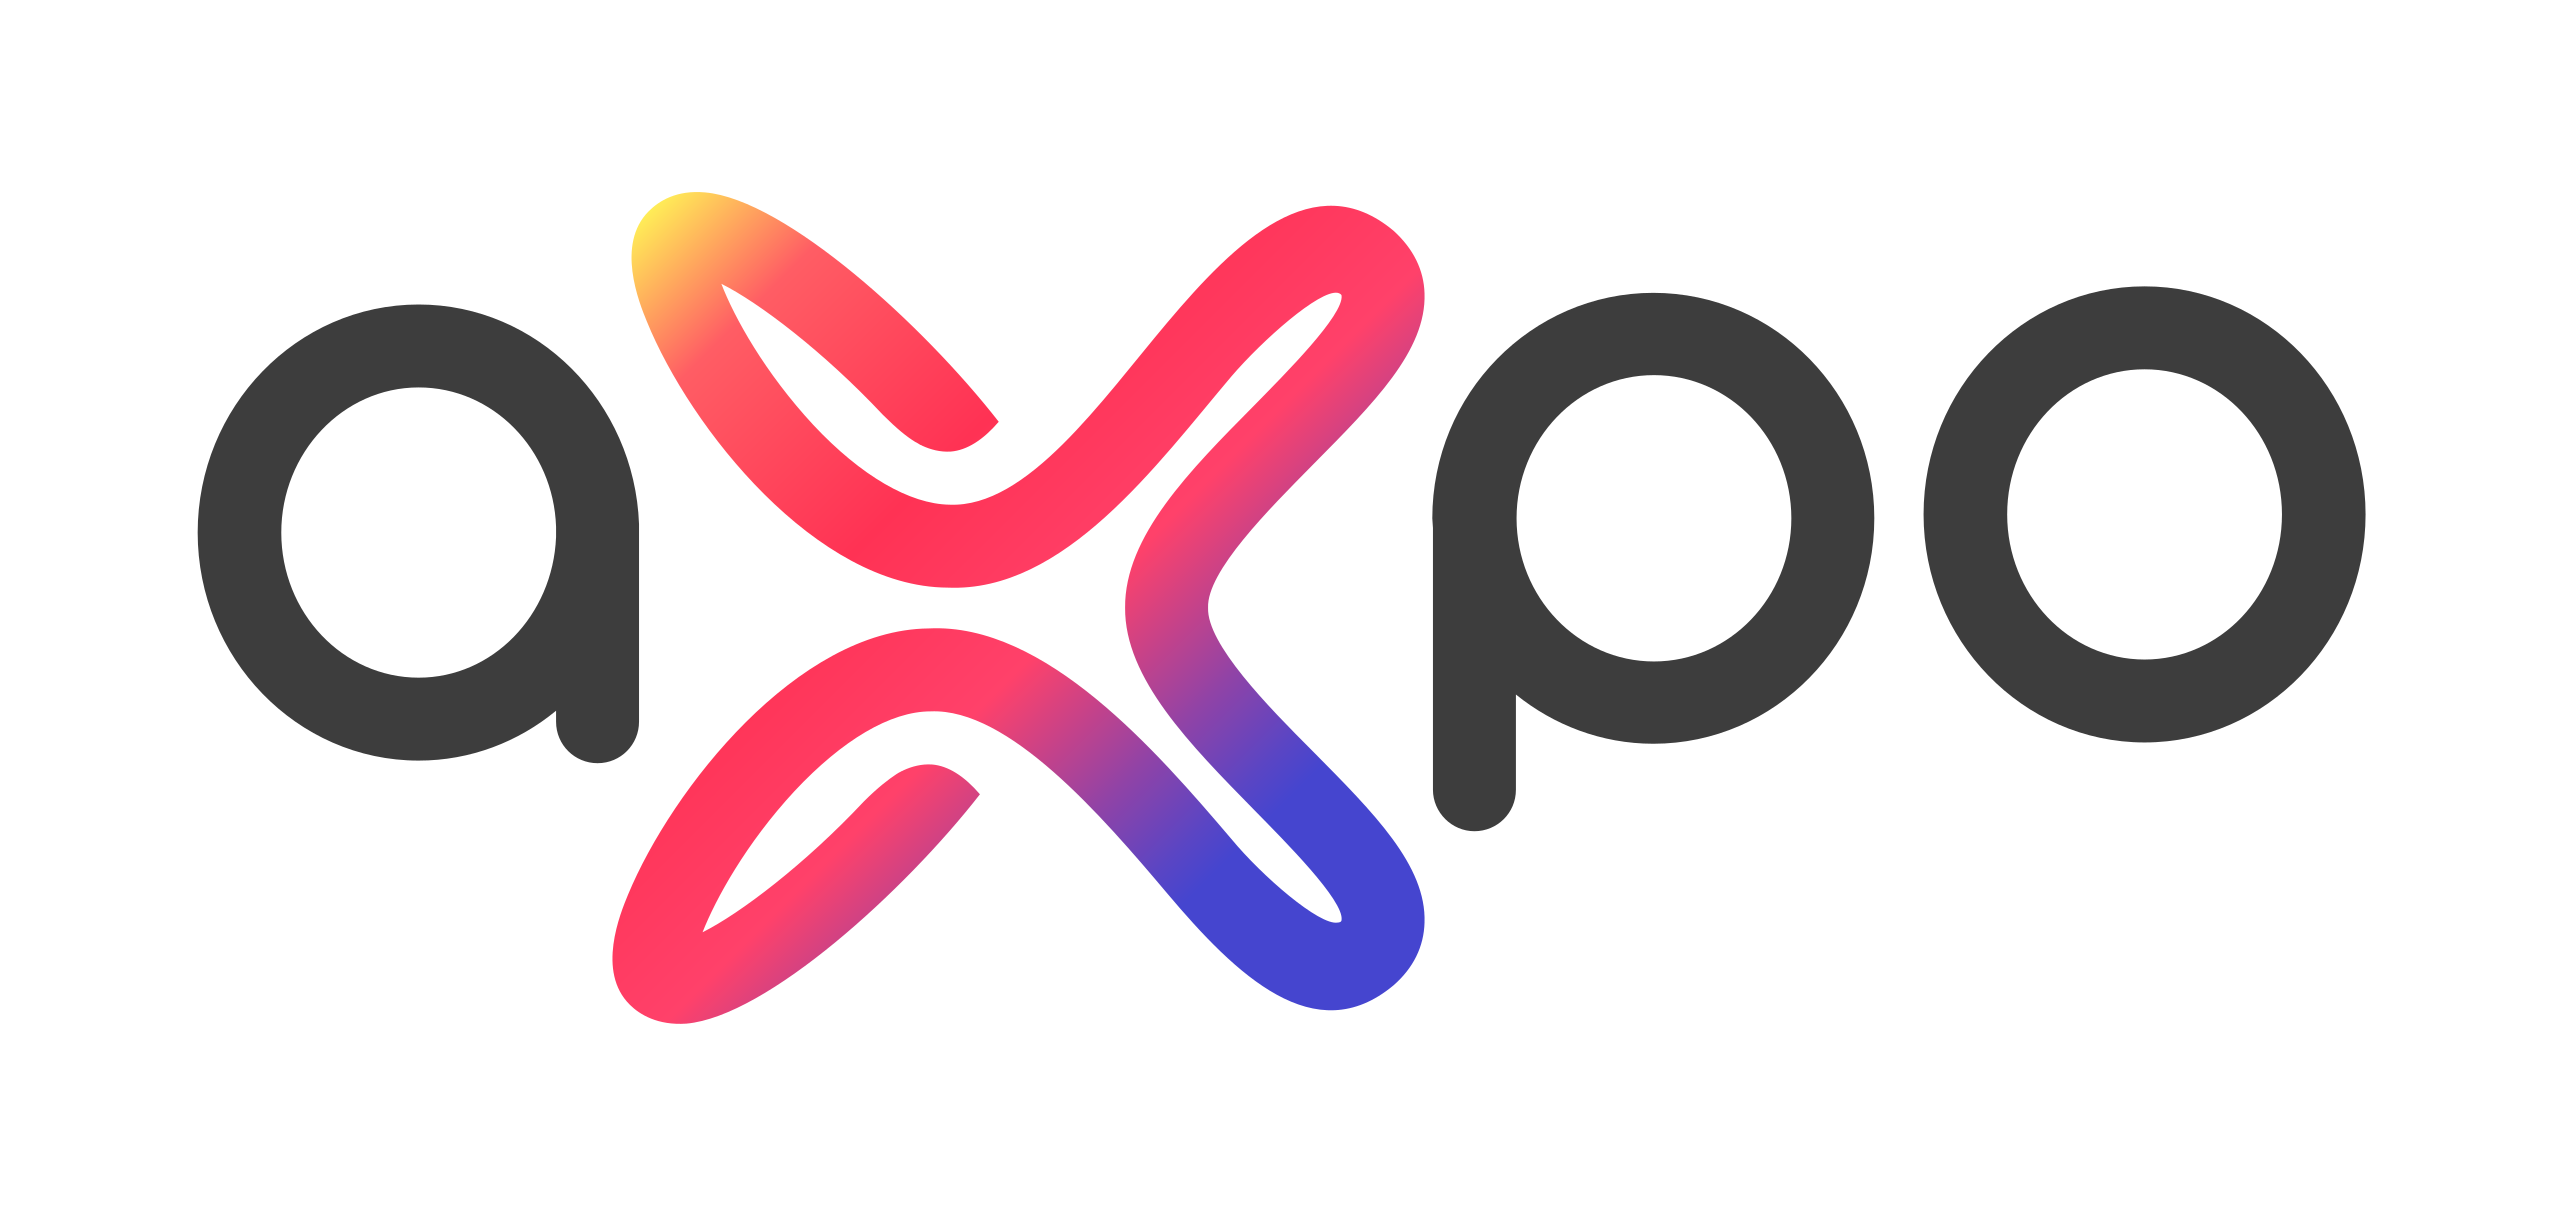 File:Xapo Logo.png - Wikipedia